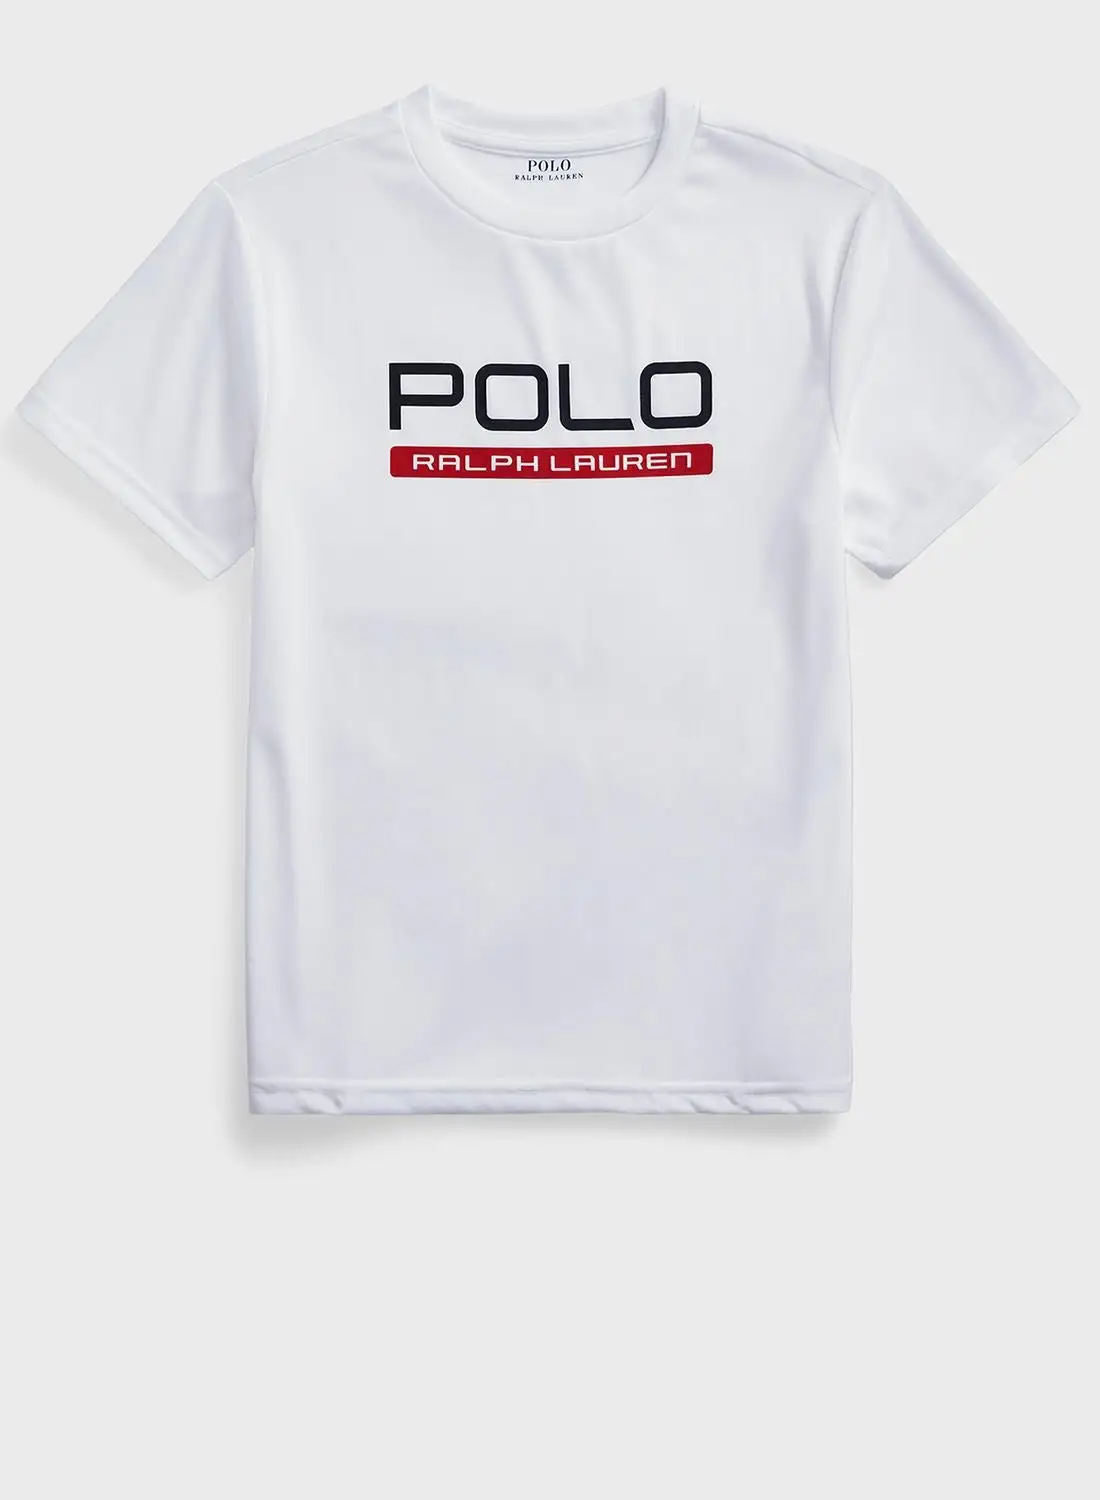 POLO RALPH LAUREN Youth Logo T-Shirt